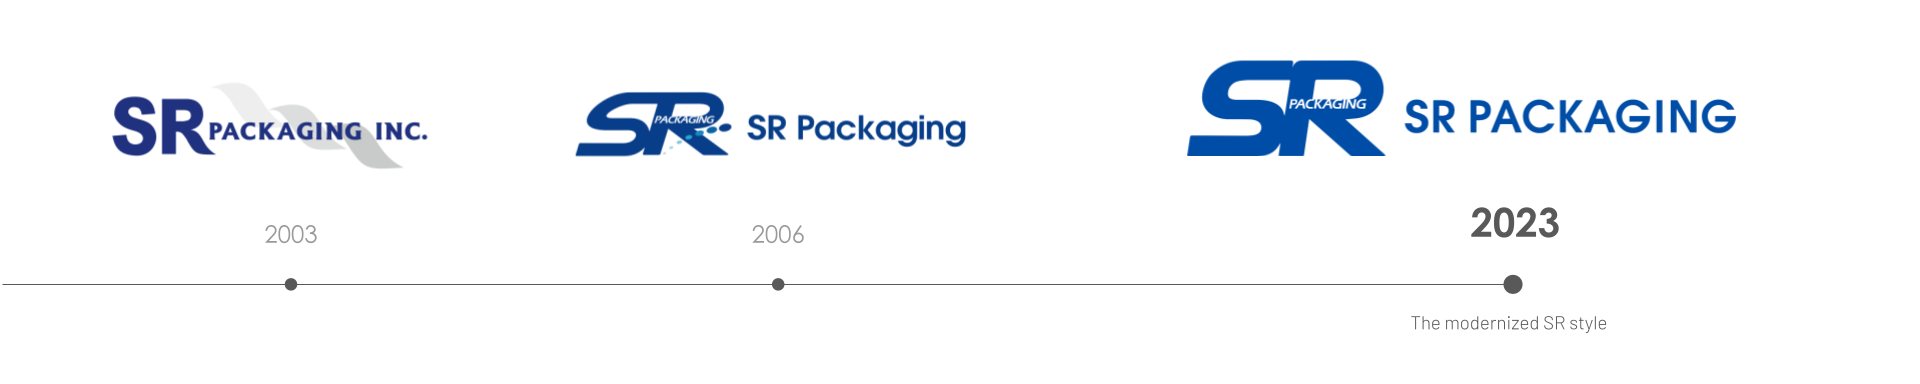 SR Packaging logo updates